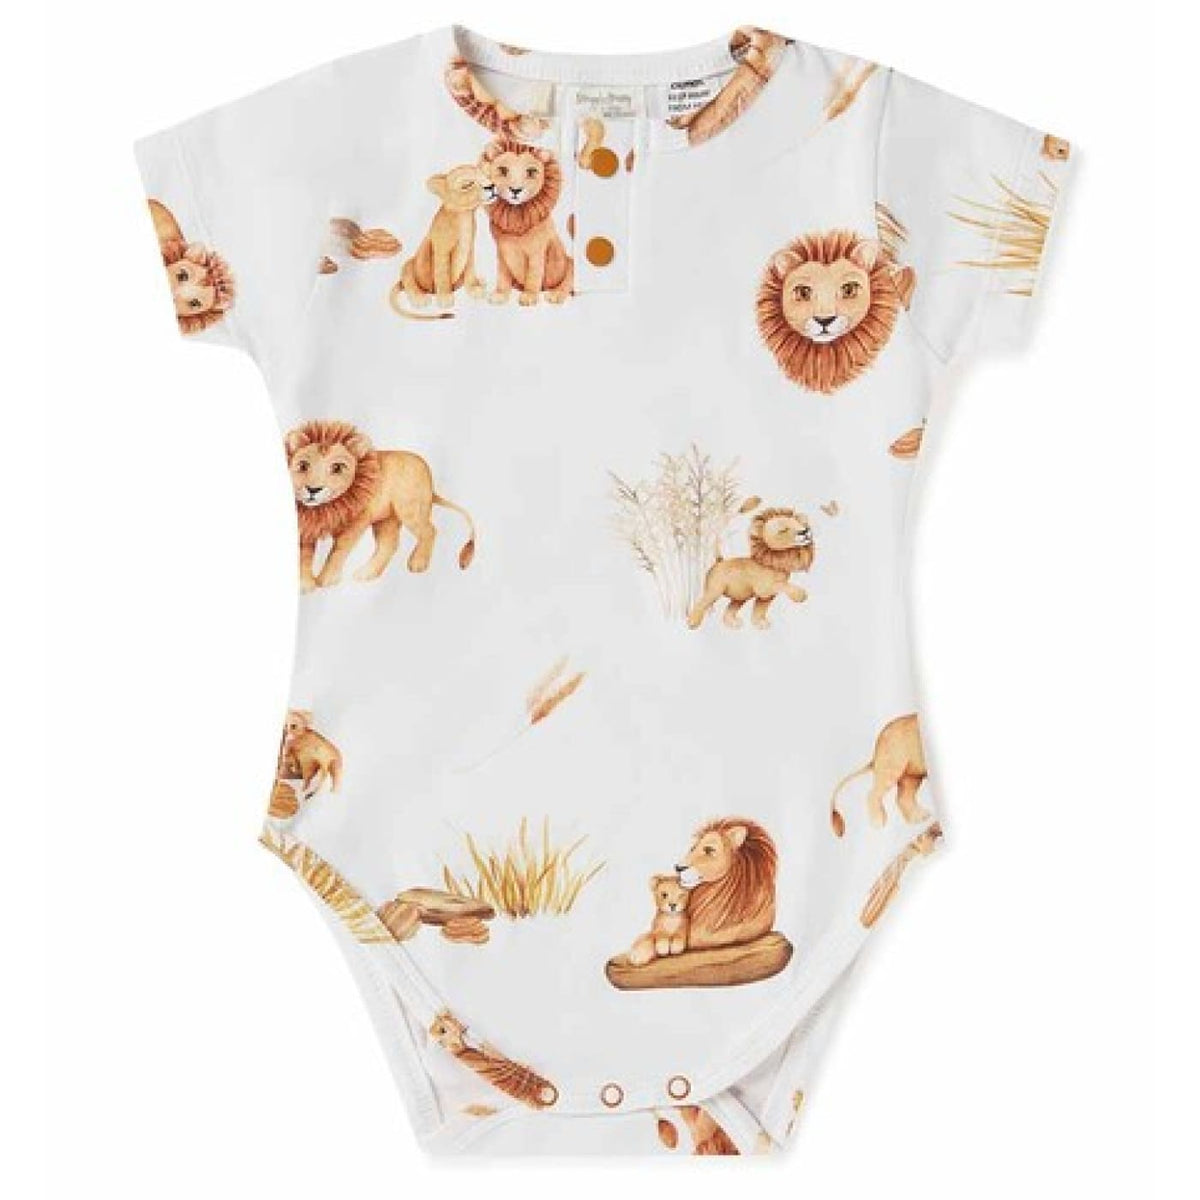 Snuggle Hunny Kids Short Sleeve Bodysuit - Lion 0-3M - 0-3M / Lion - BABY &amp; TODDLER CLOTHING - BODYSUITS/SETS/MIX-MATCH